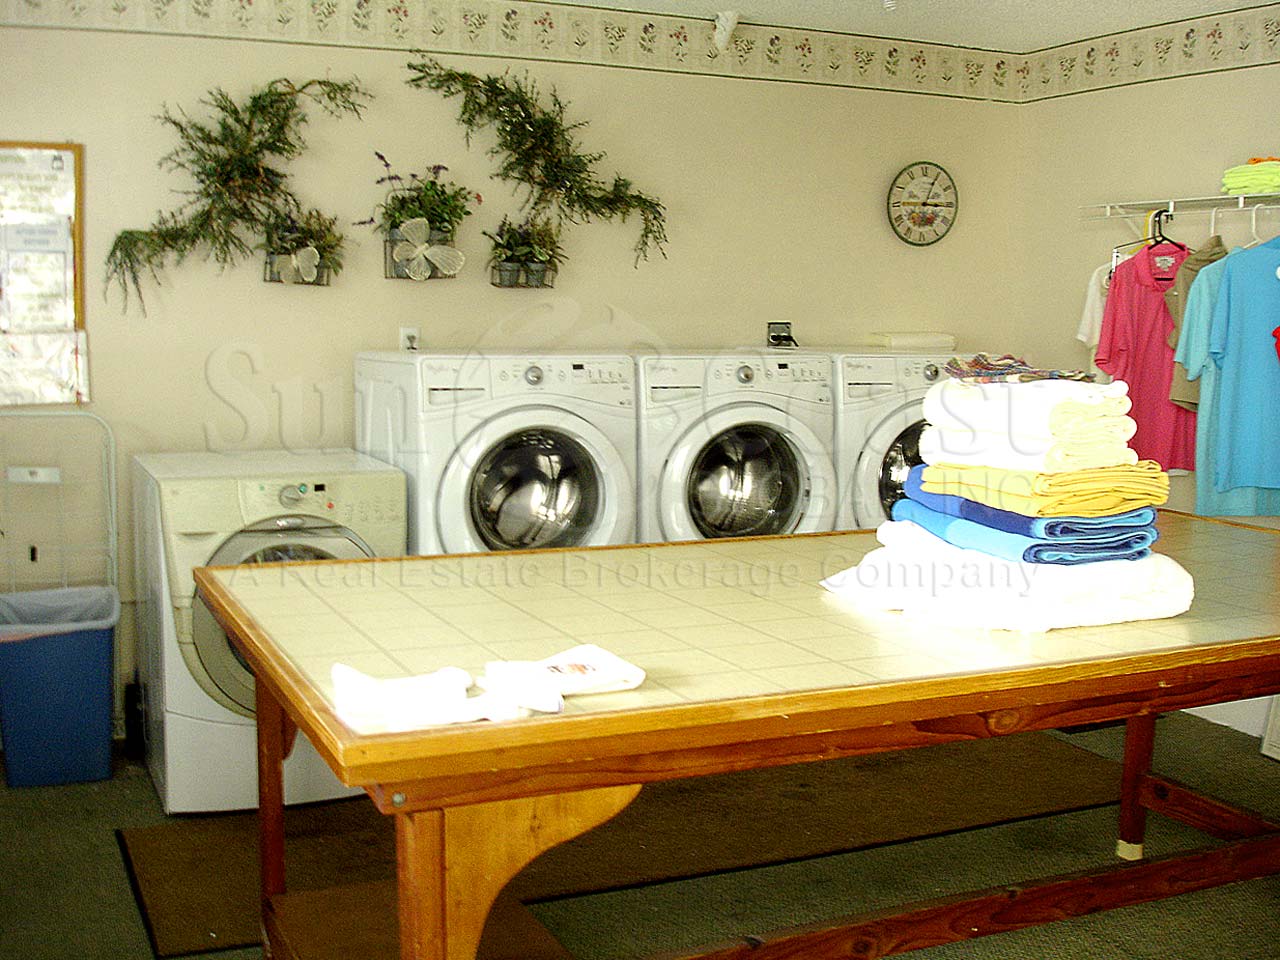 Leeward Cove Laundry